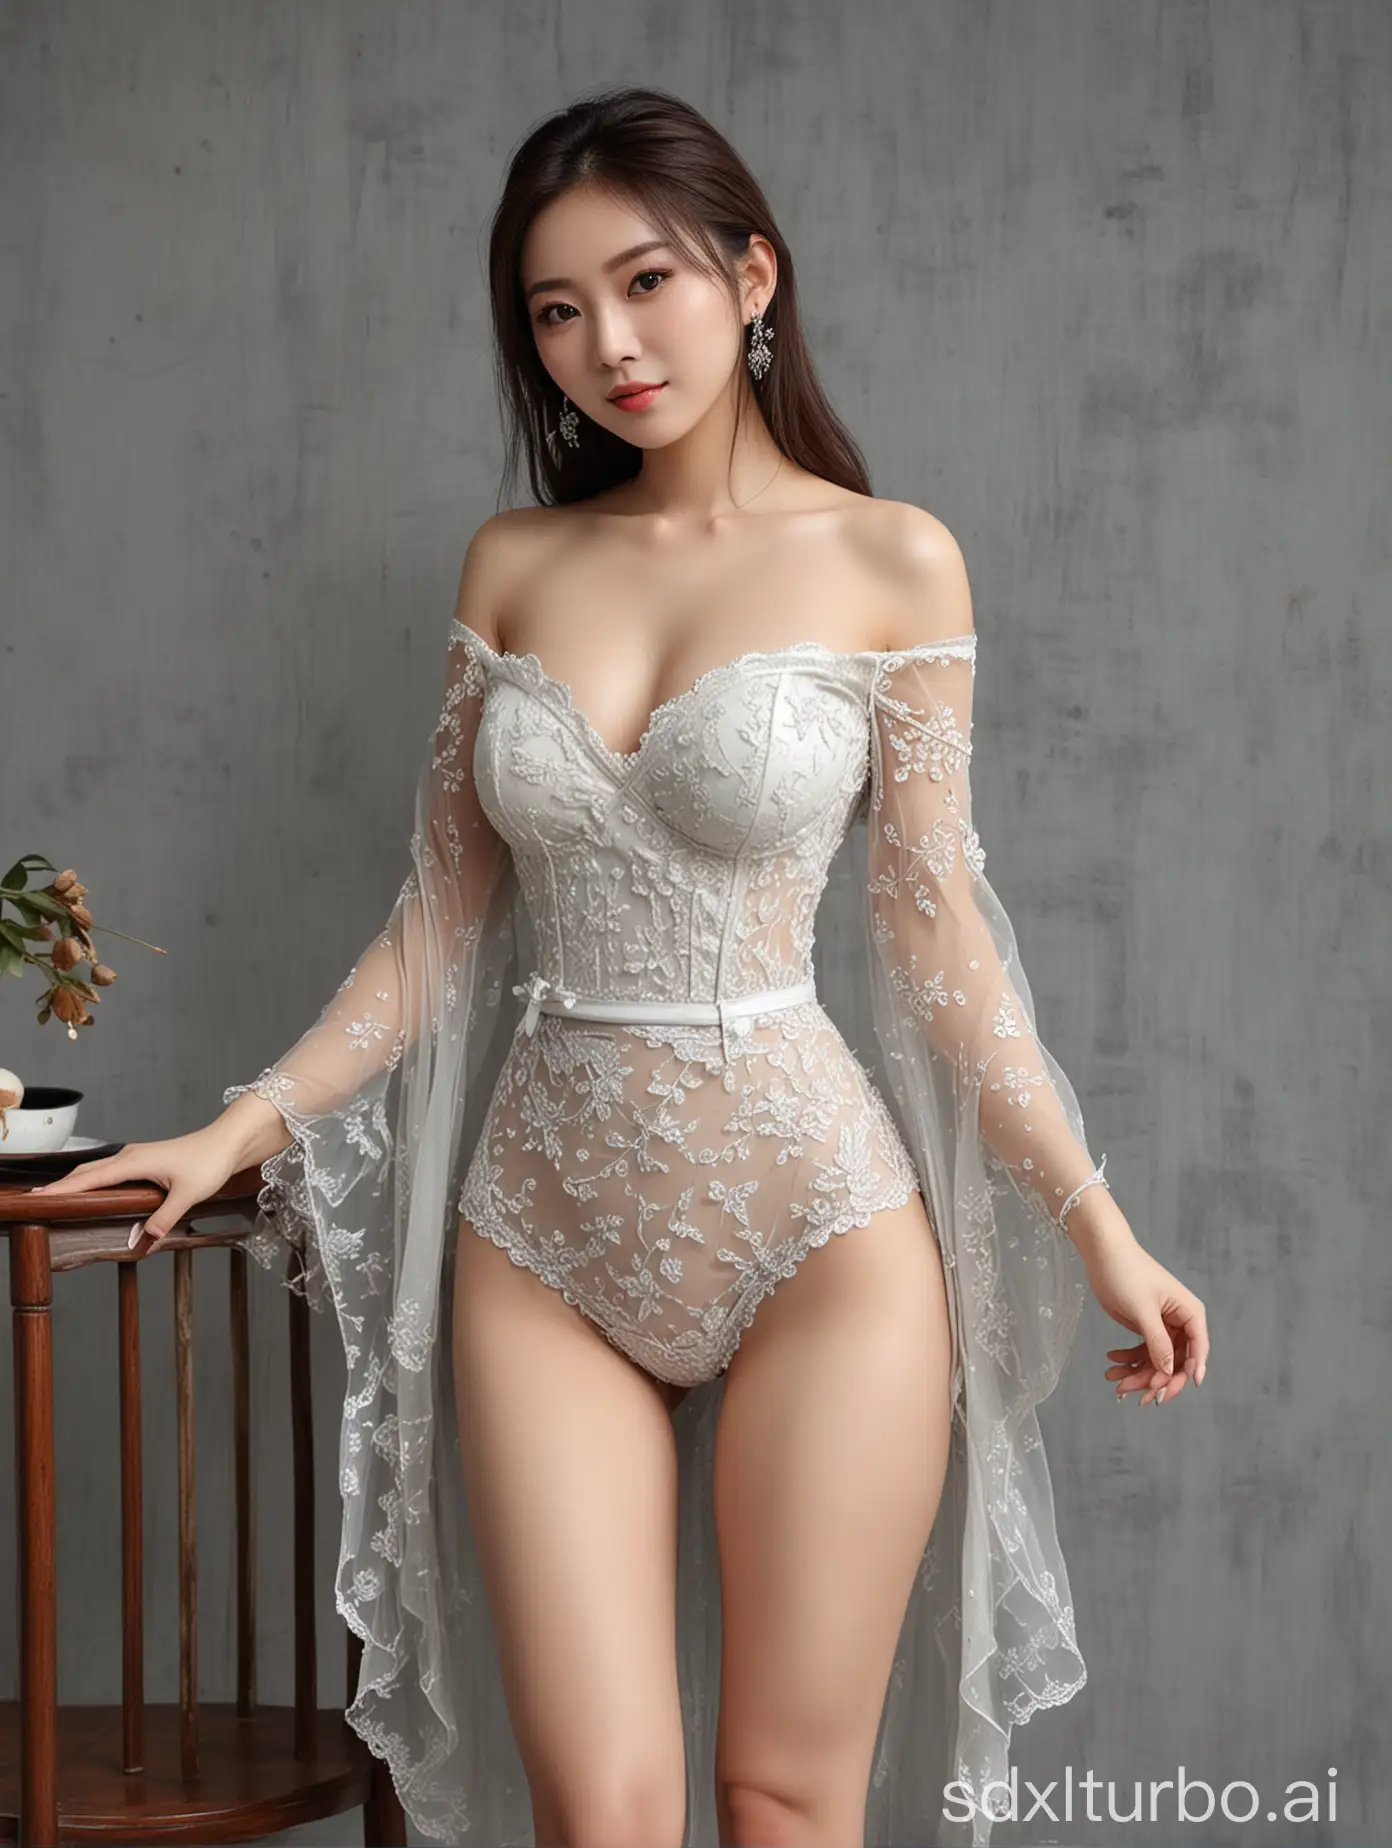 China beautiful woman, full body photo, far look beautiful, sexy and generous